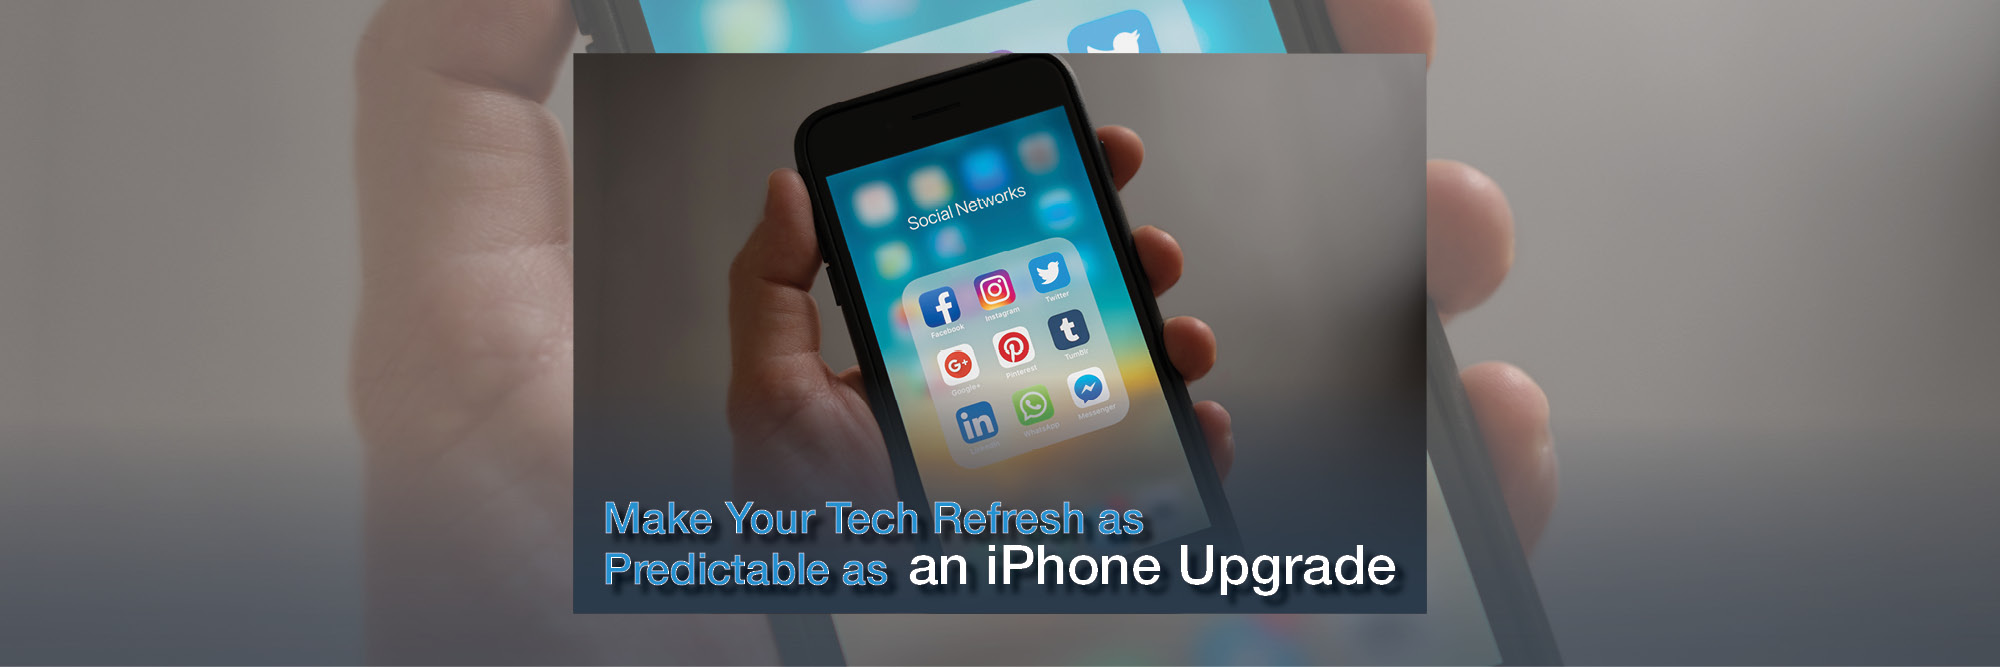 Make Your Tech Refresh as Predictable as an iPhone Upgrade